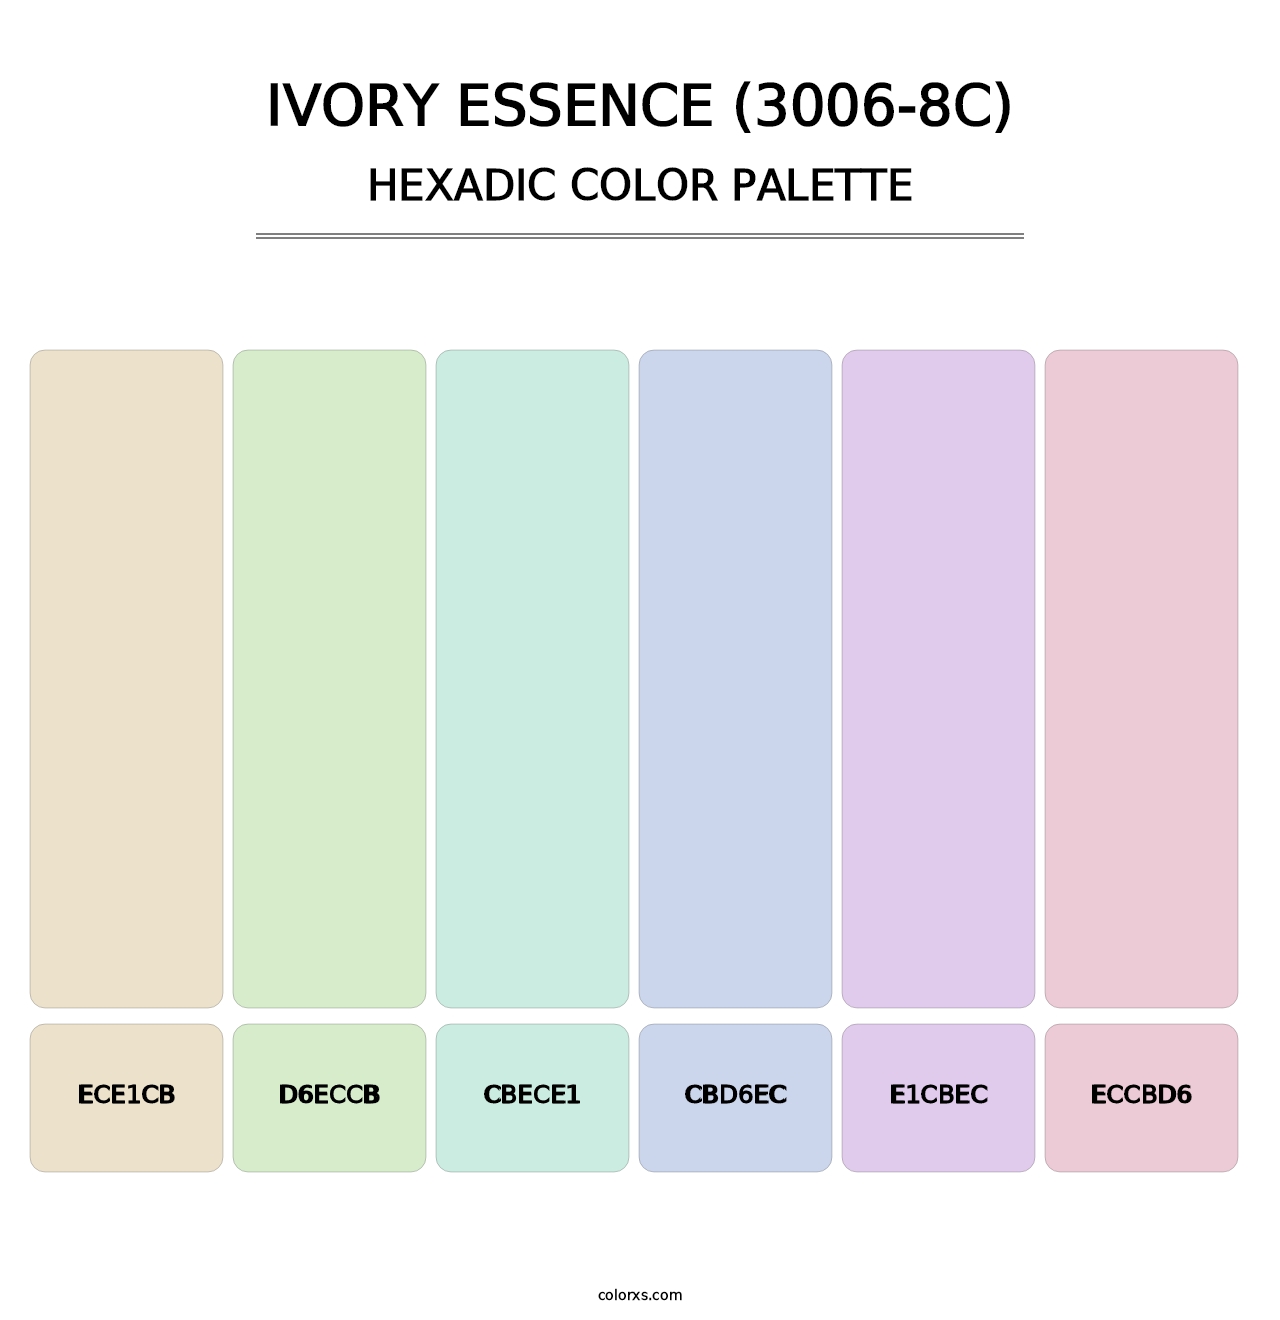 Ivory Essence (3006-8C) - Hexadic Color Palette